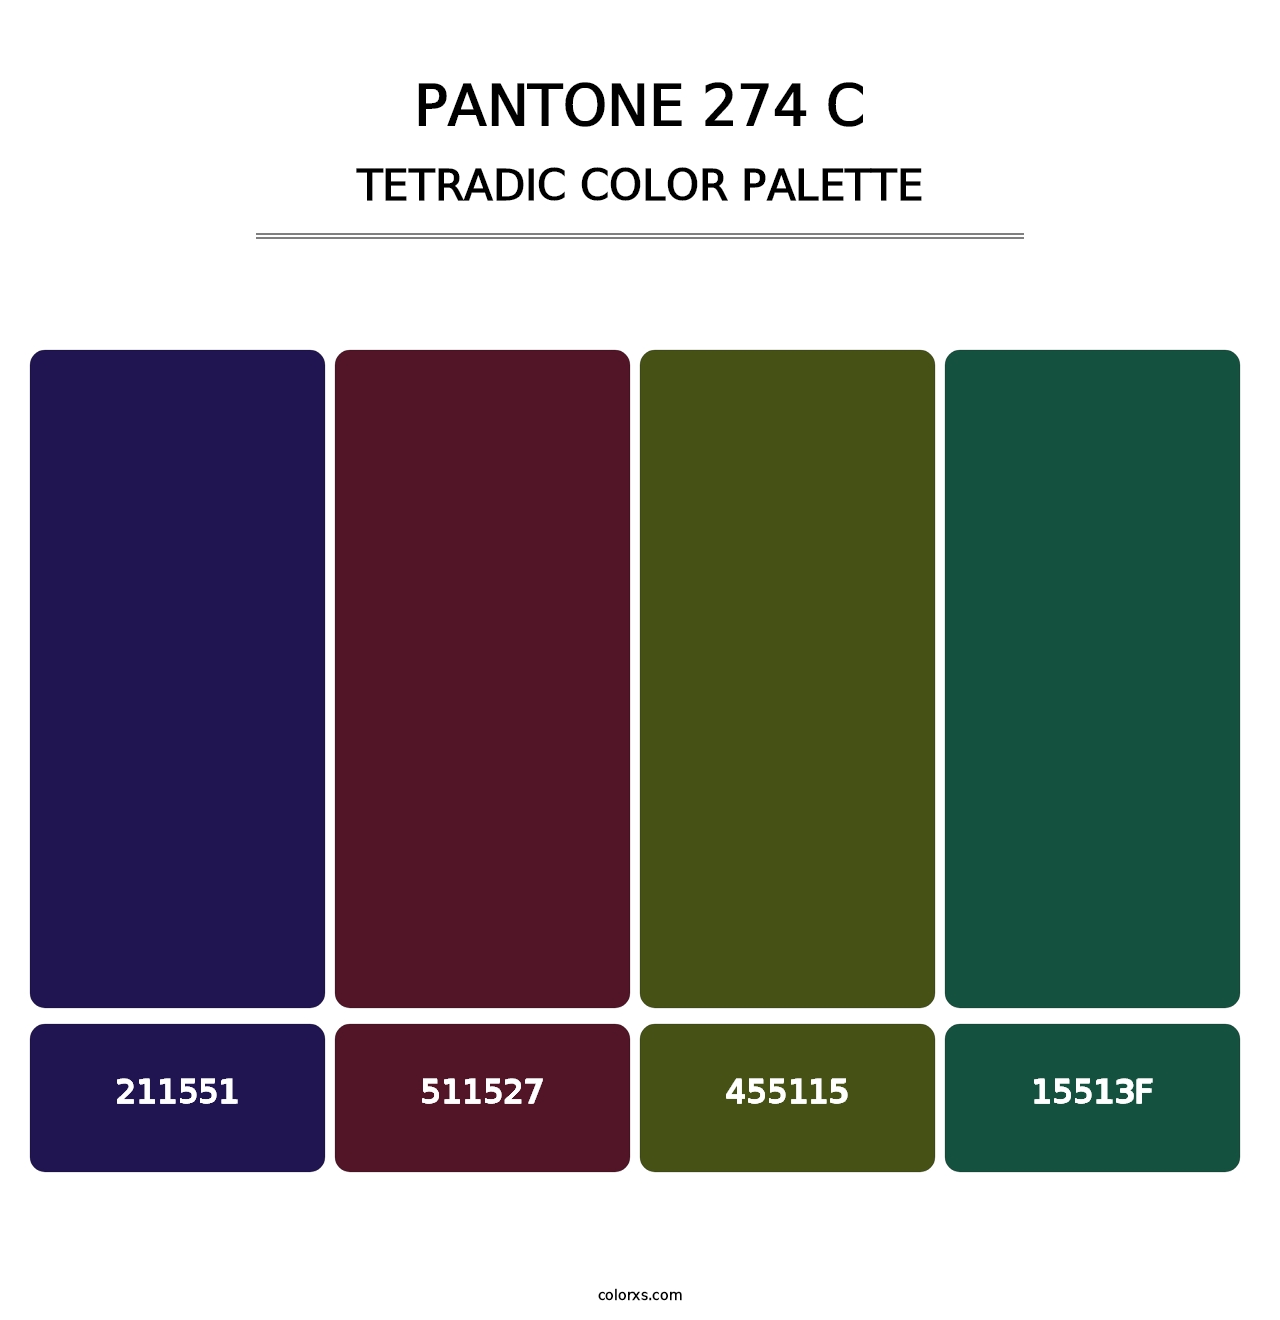 PANTONE 274 C - Tetradic Color Palette